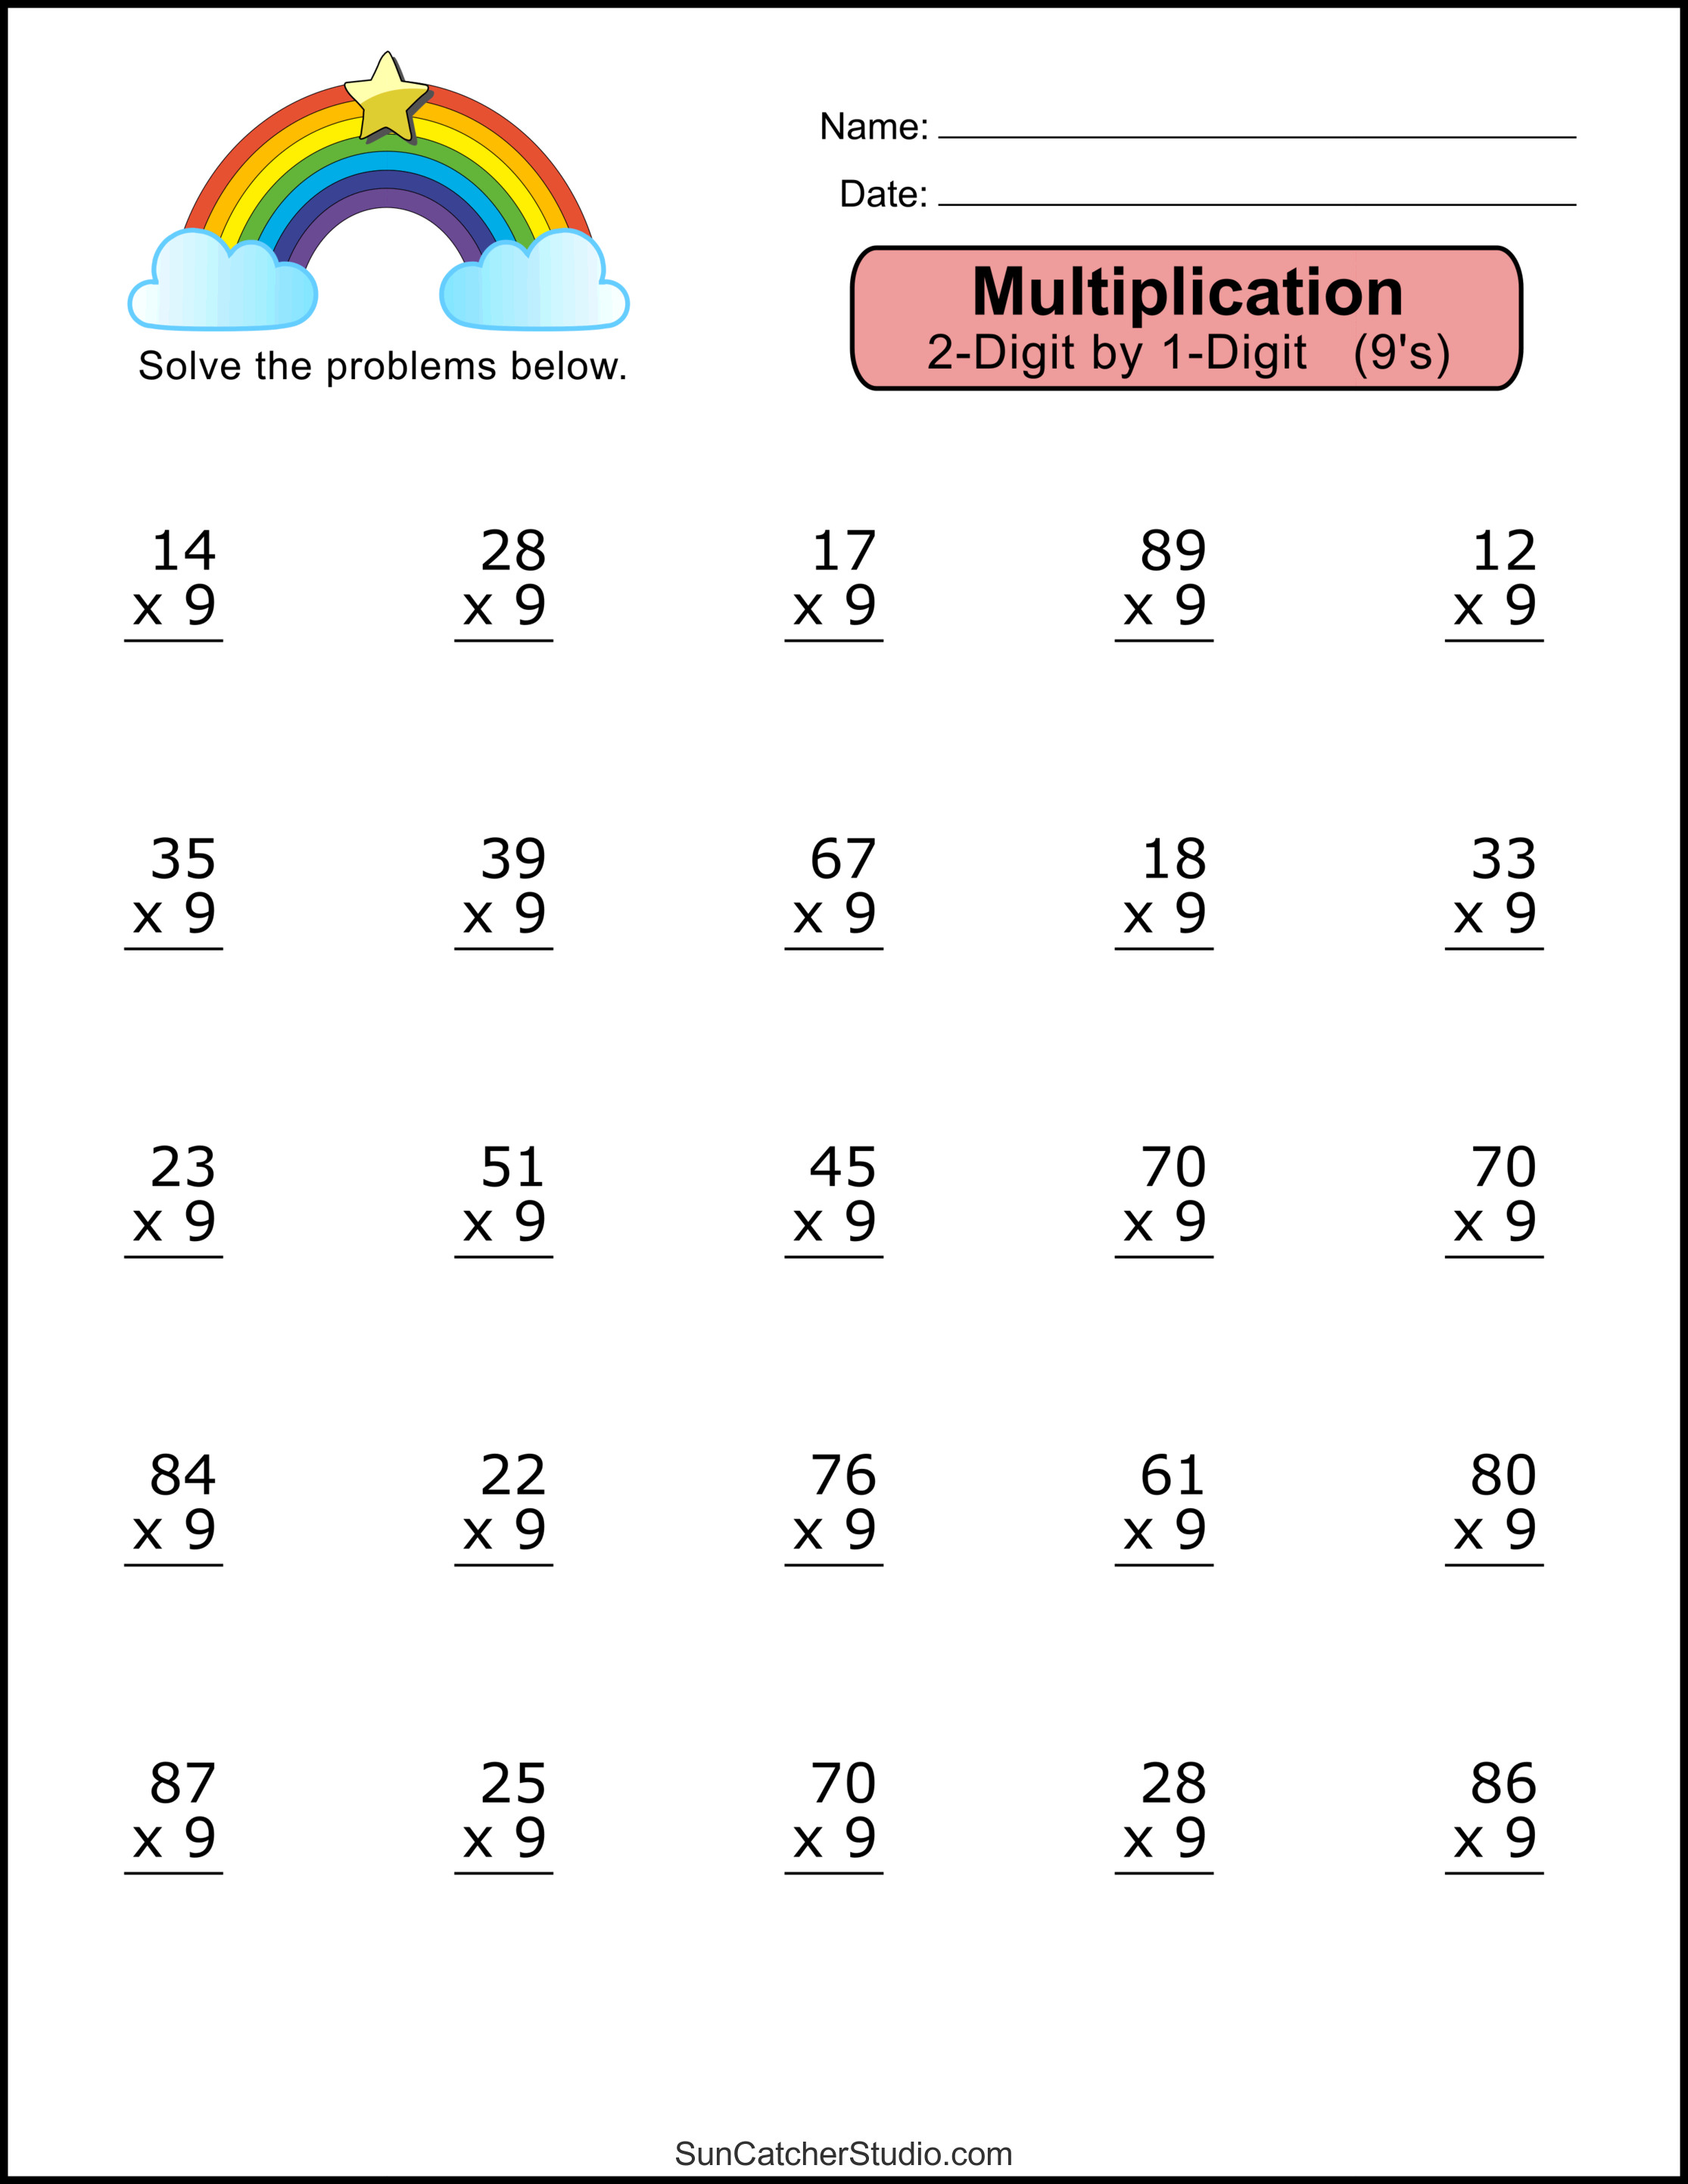 Multiplication Worksheet 09 Ee9999 Fefefe 